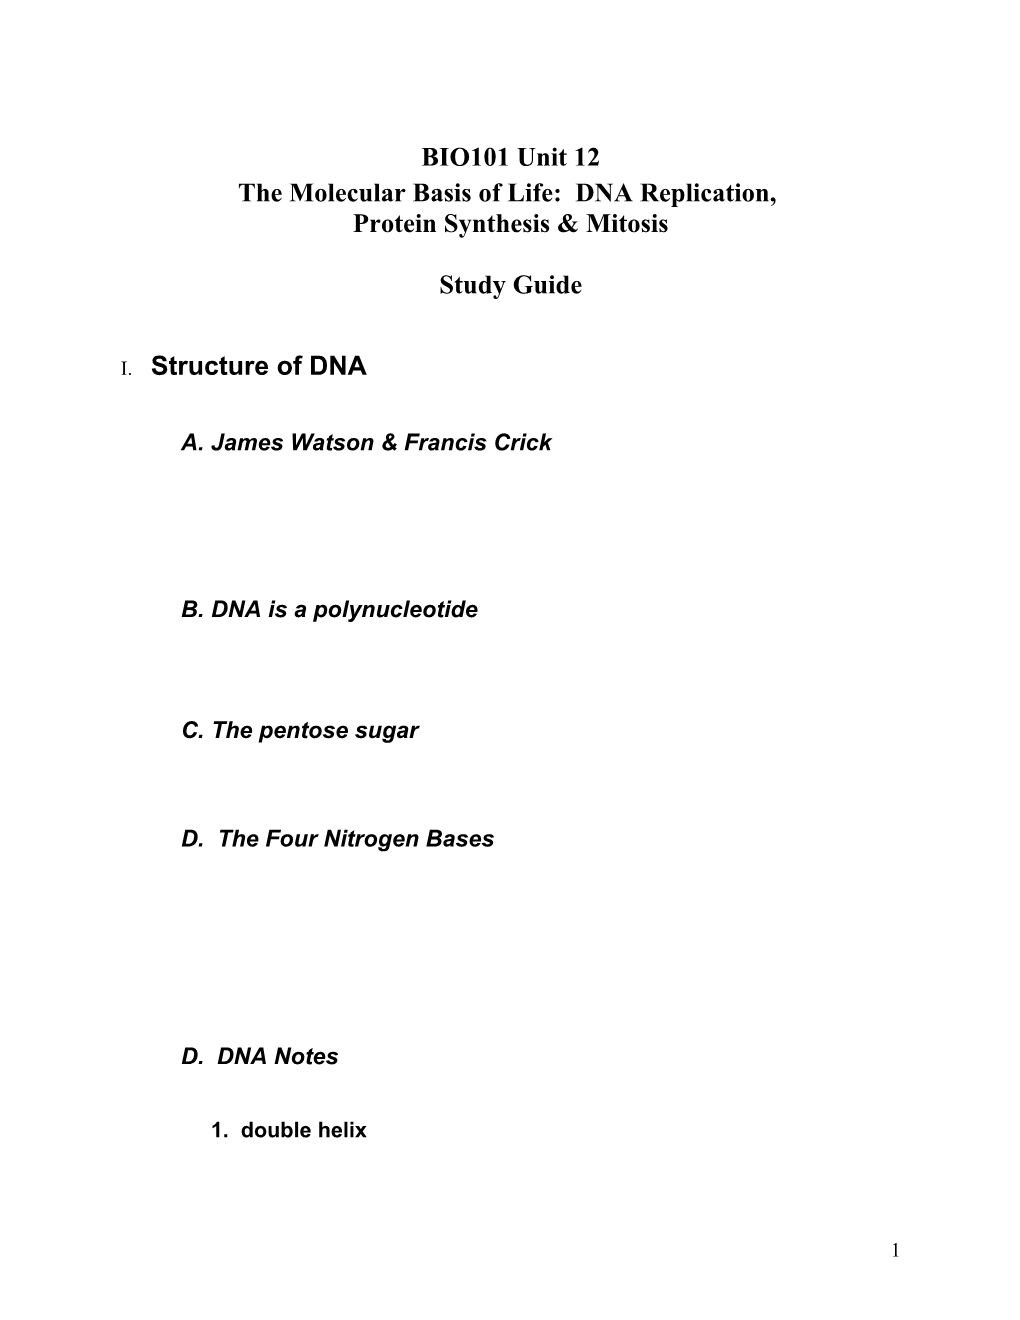 The Molecular Basis of Life: DNA Replication